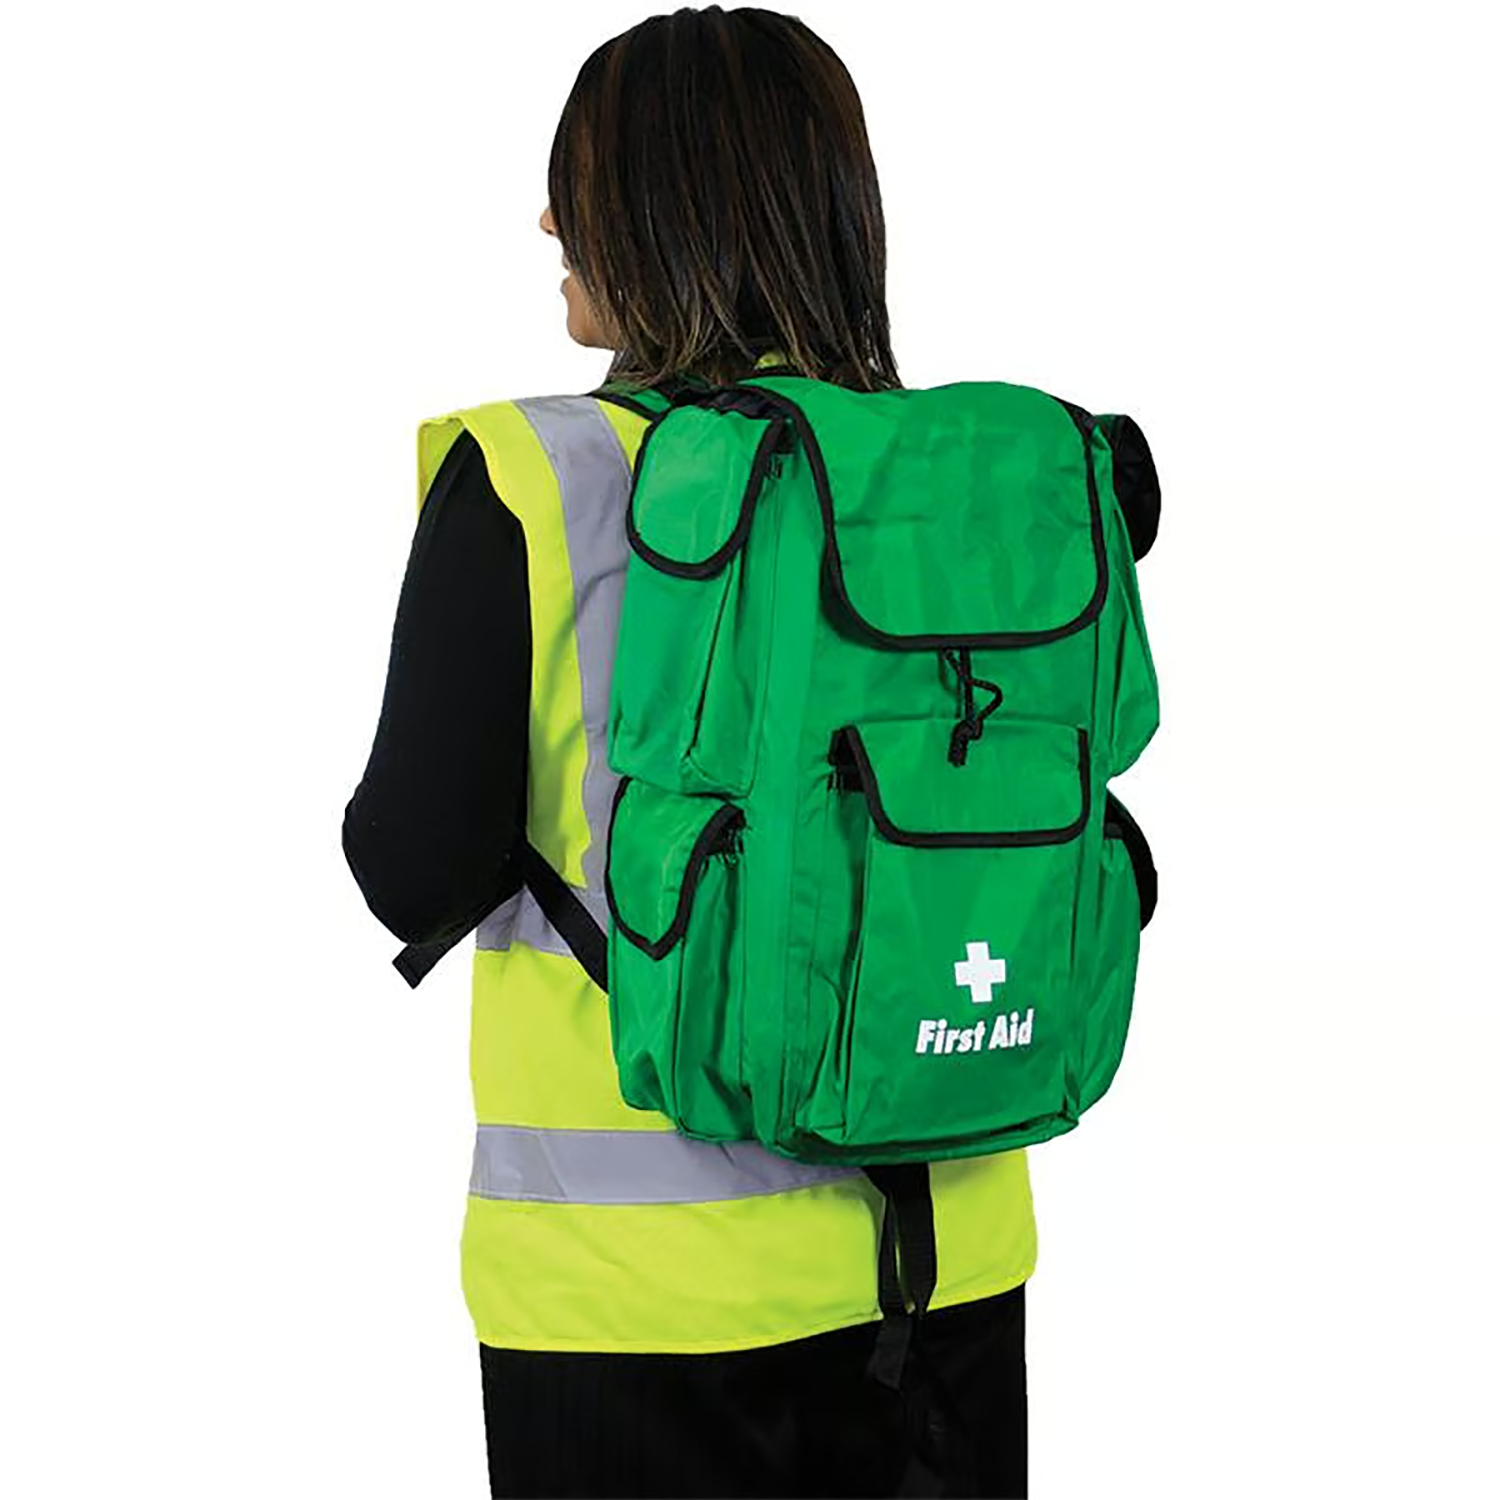 First Aid Rucksack | Green |  Empty Bag | Single (1)